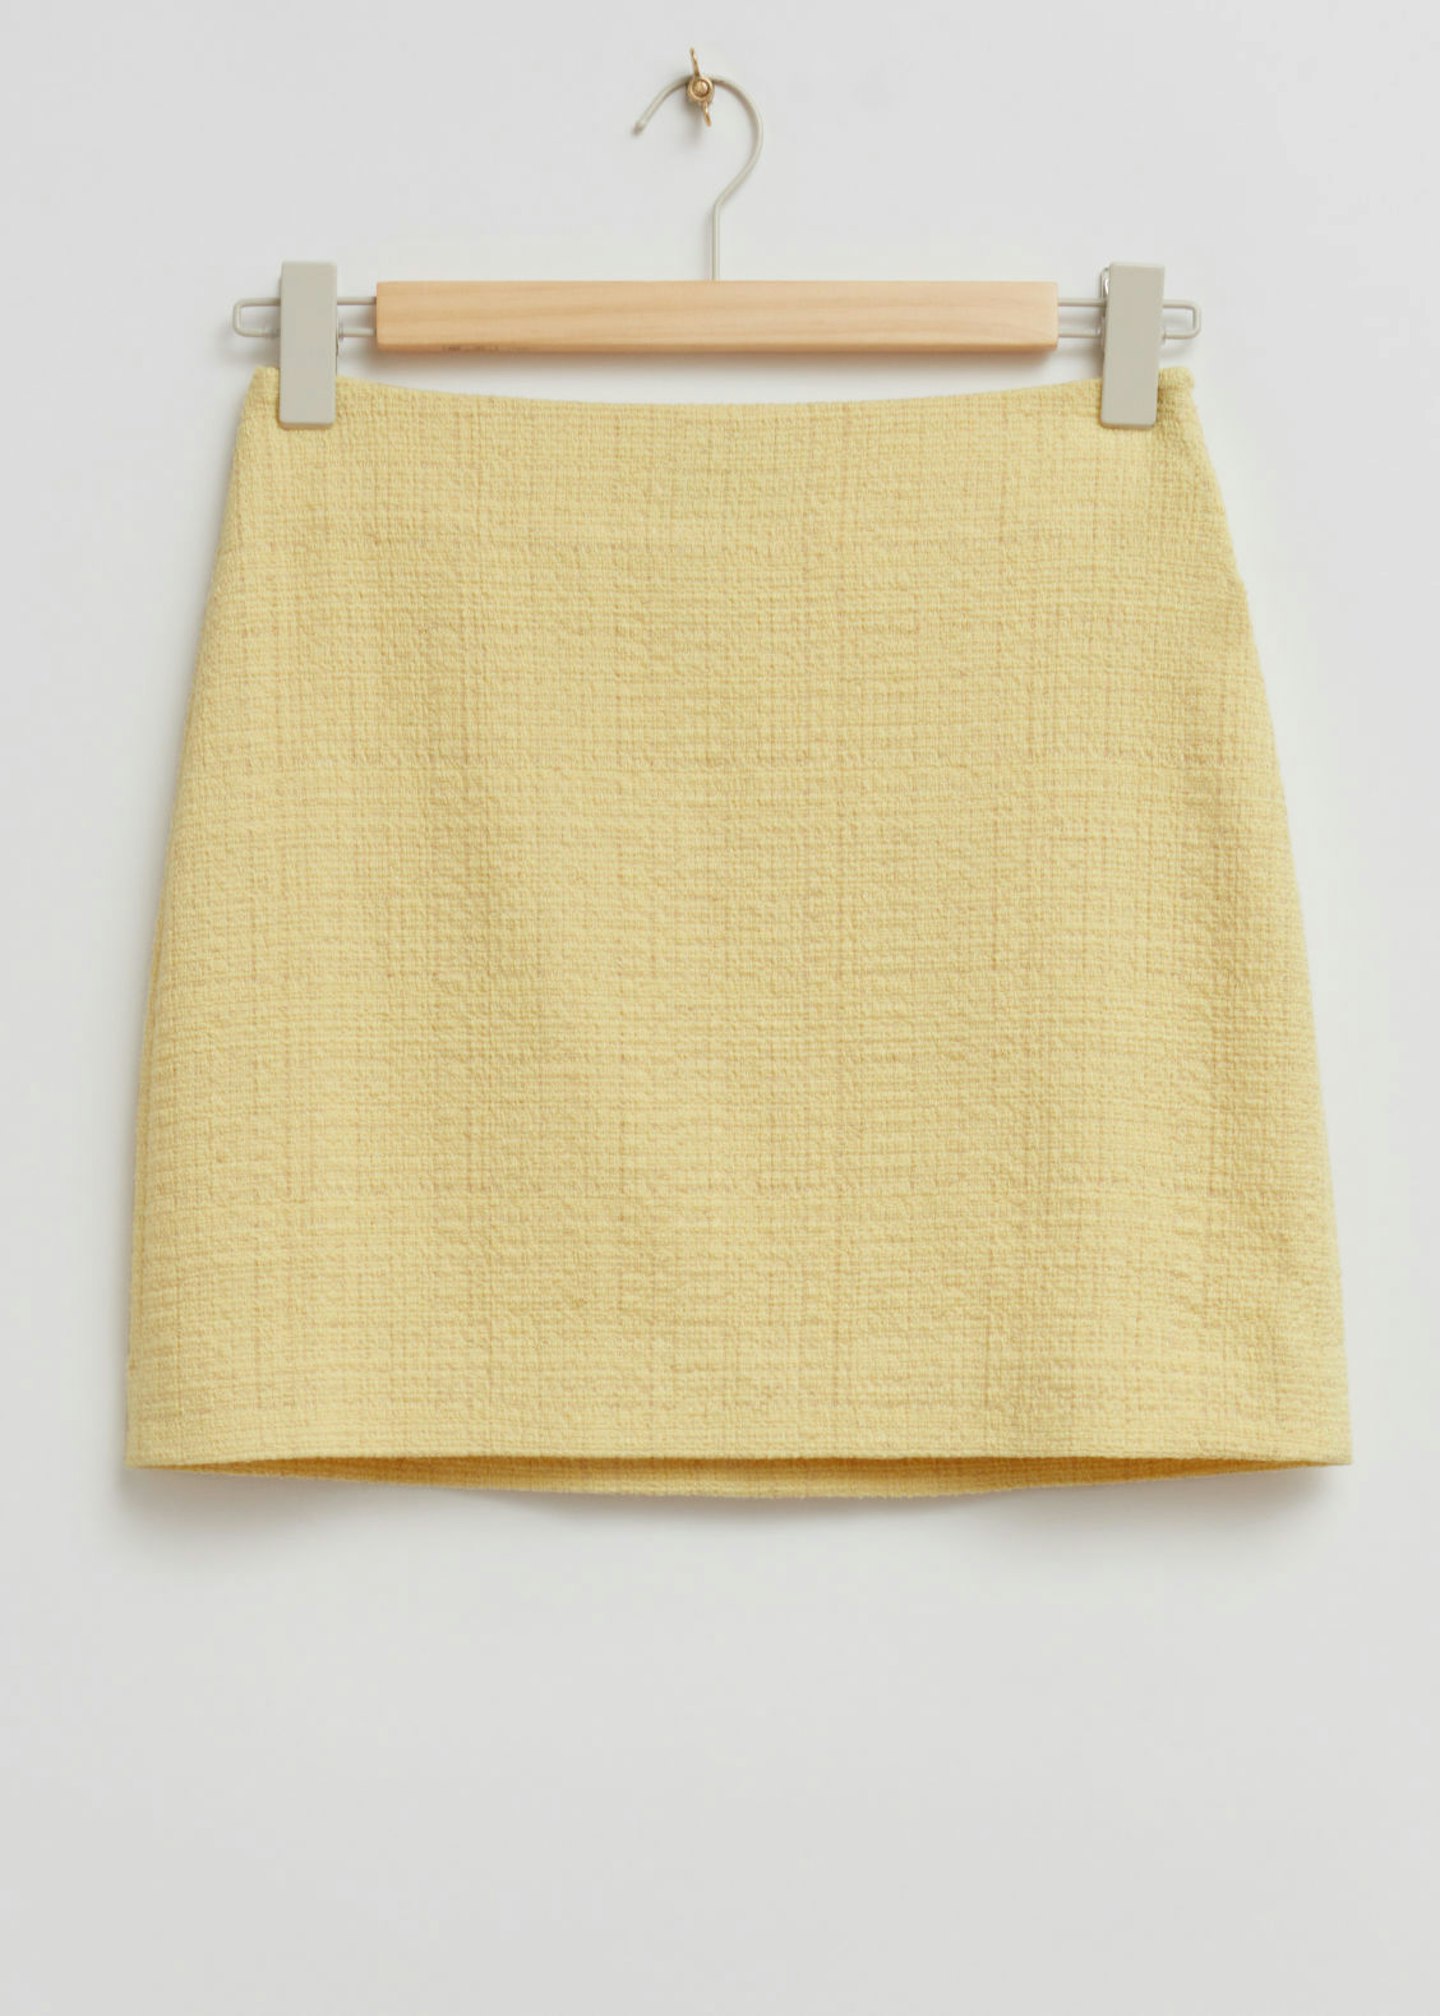 & Other Stories, High Waist Tweed Mini Skirt